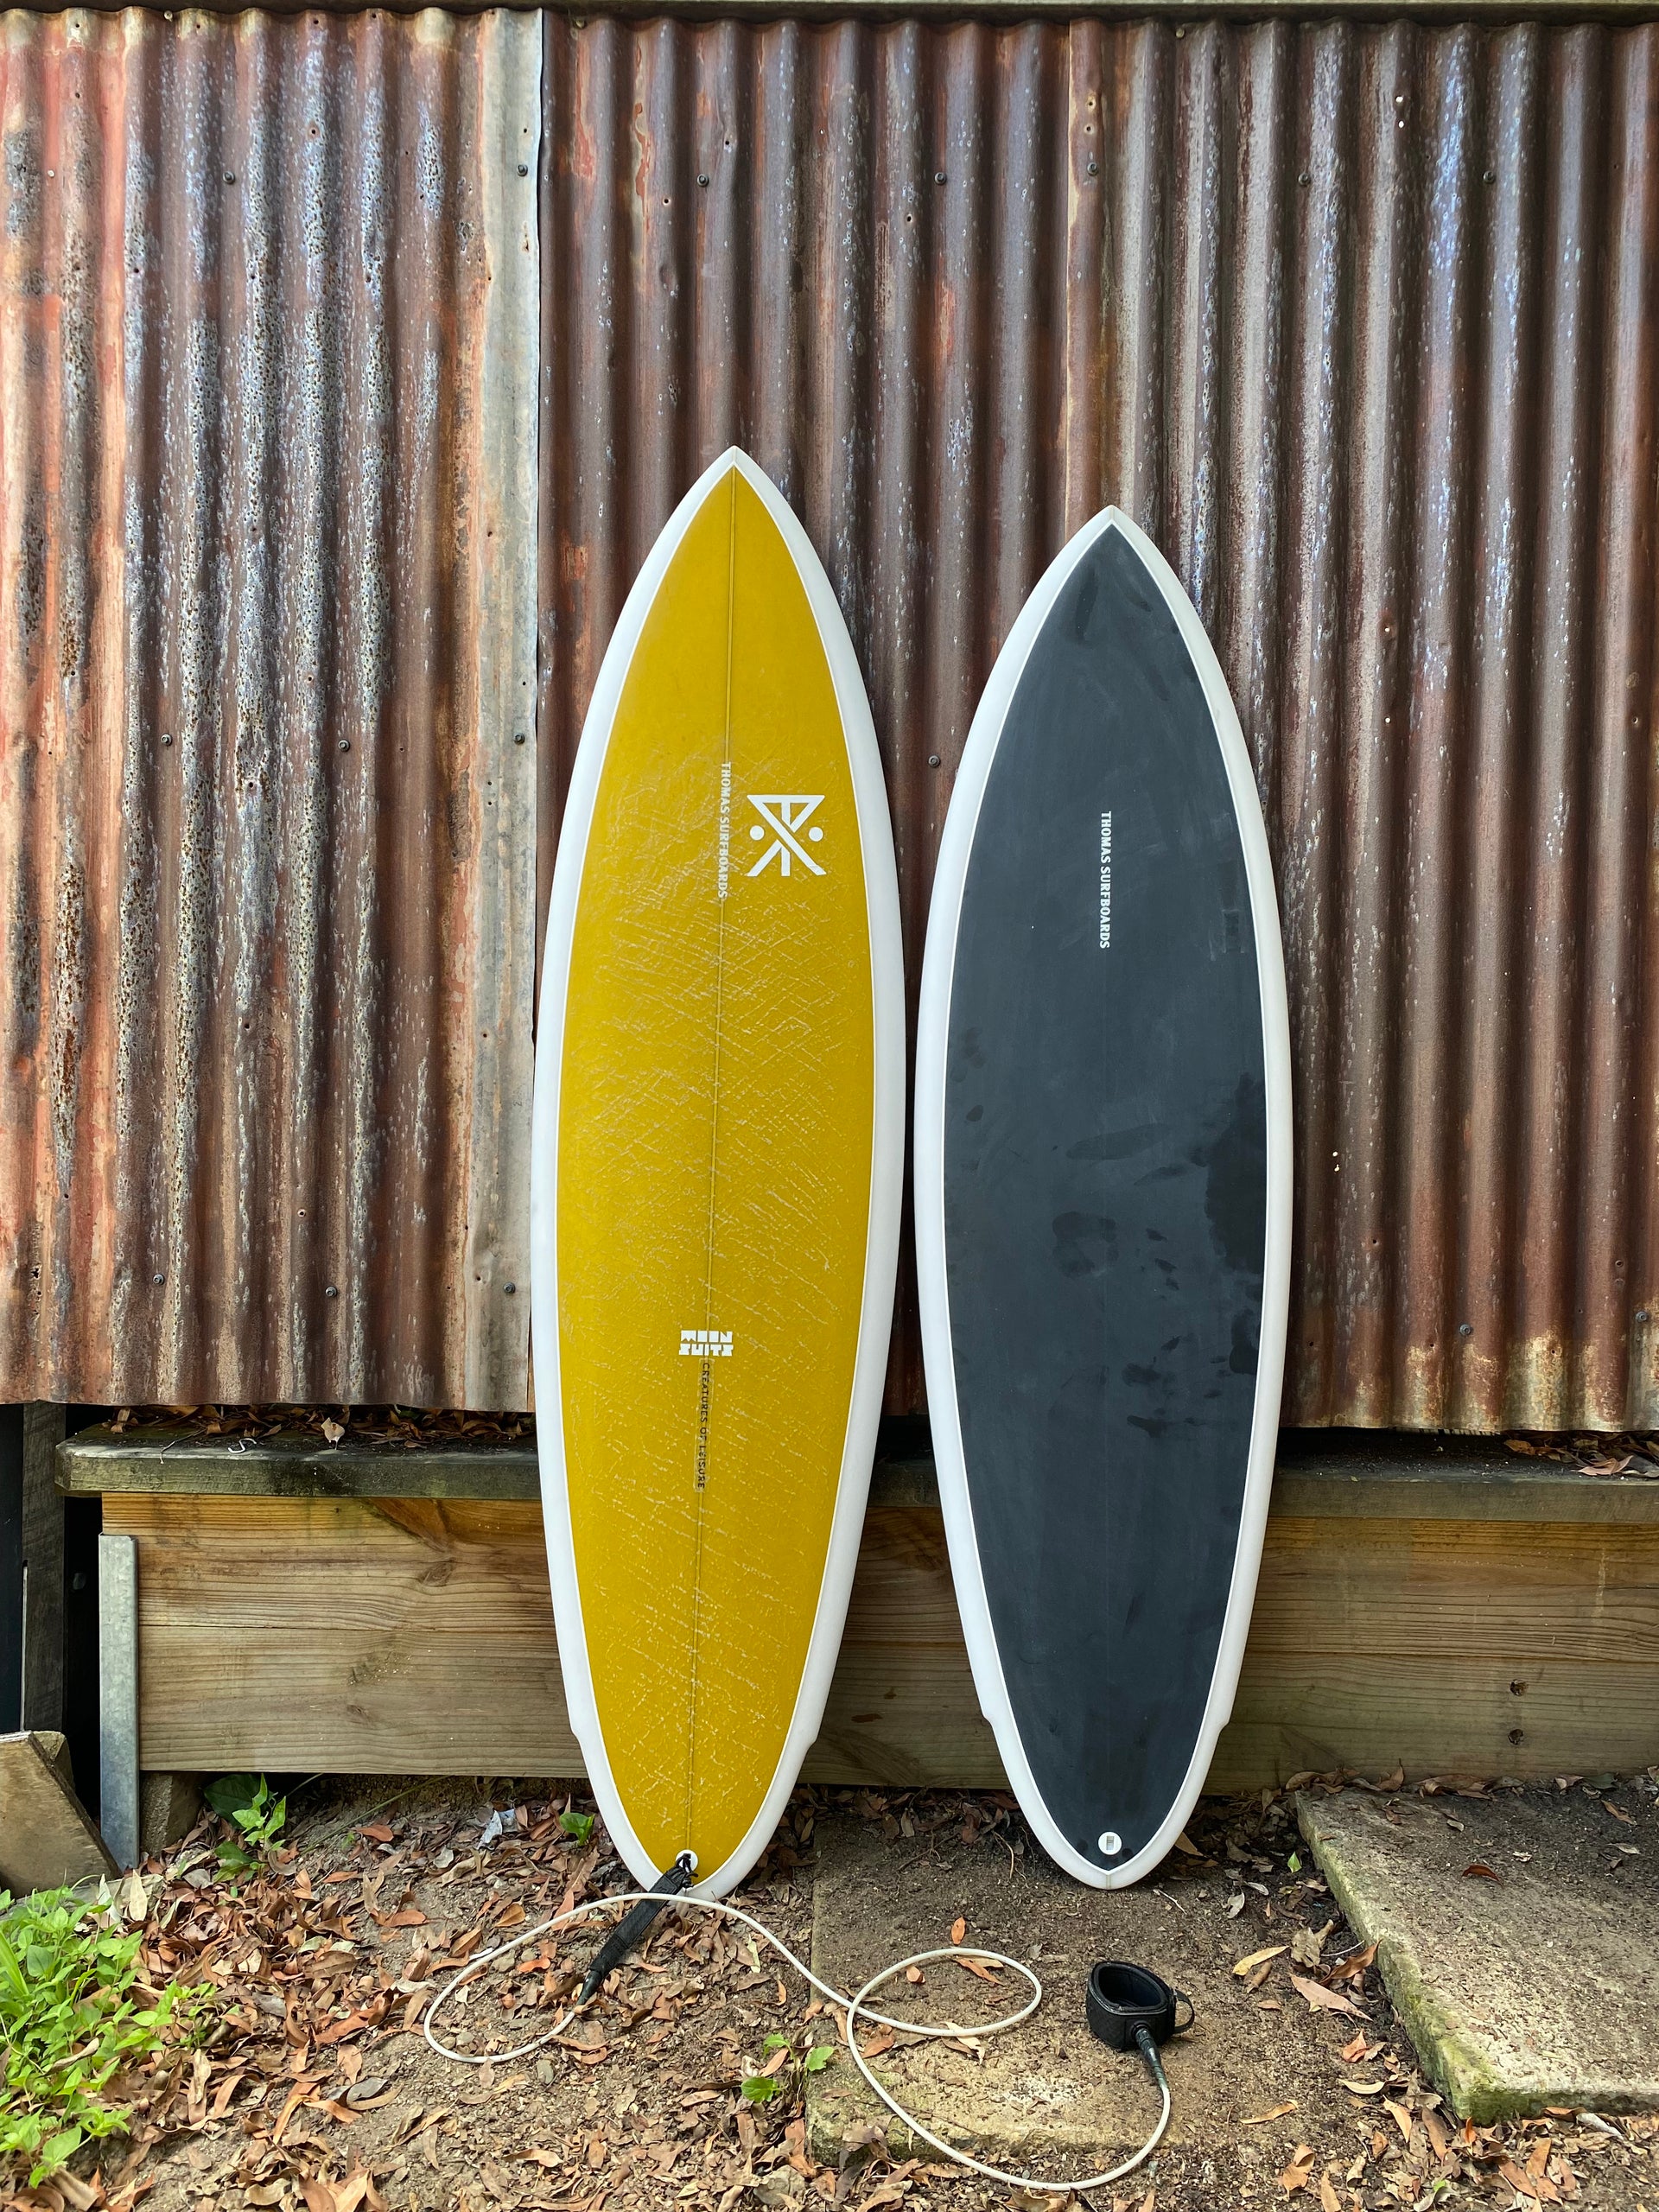 Thomas Surfboards US – Thomas Surfboards America